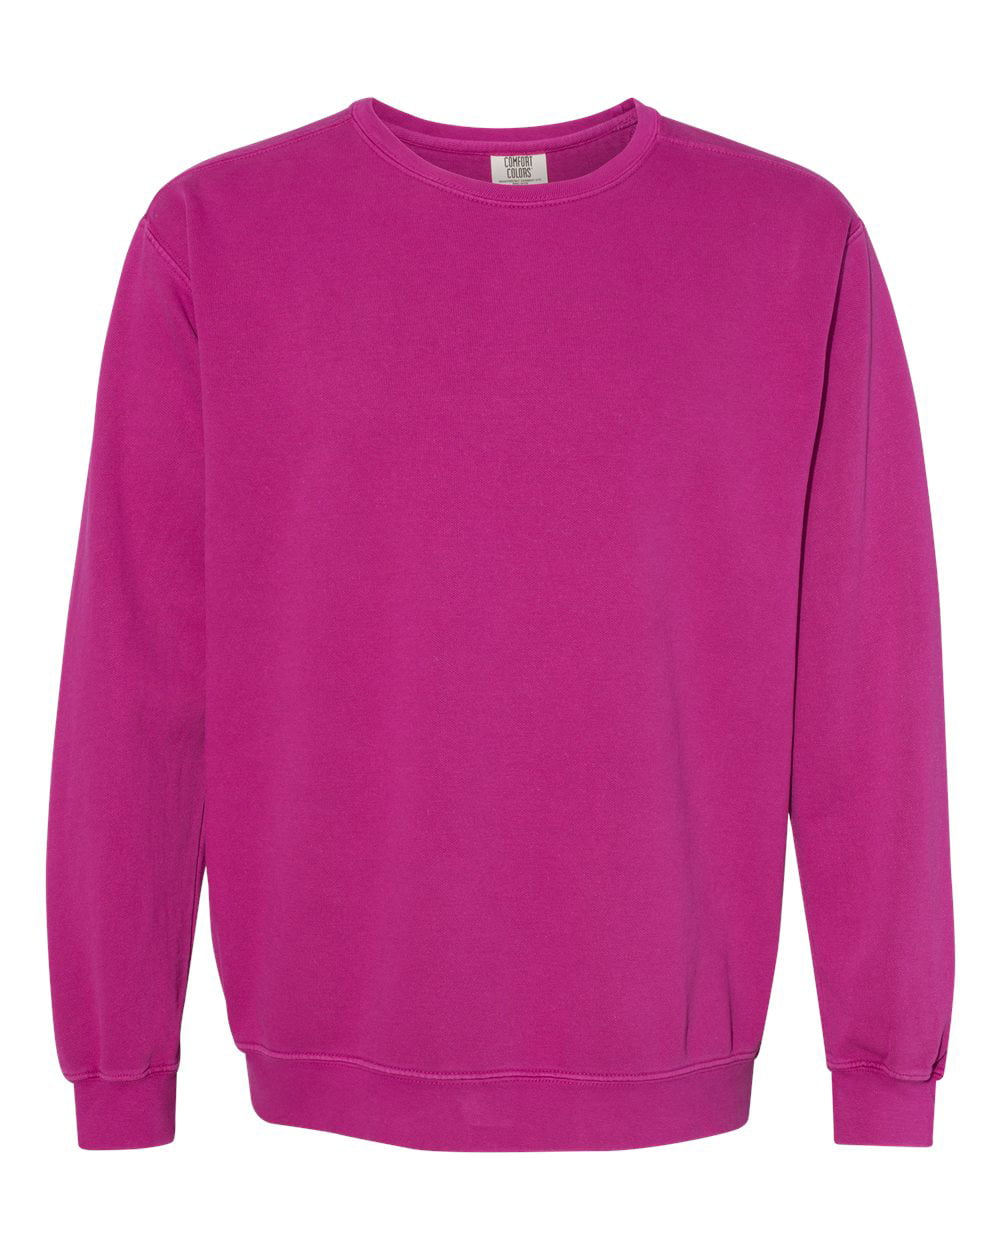 COMFORT COLORS - New - IWPF - Comfort Colors - Garment-Dyed Sweatshirt ...